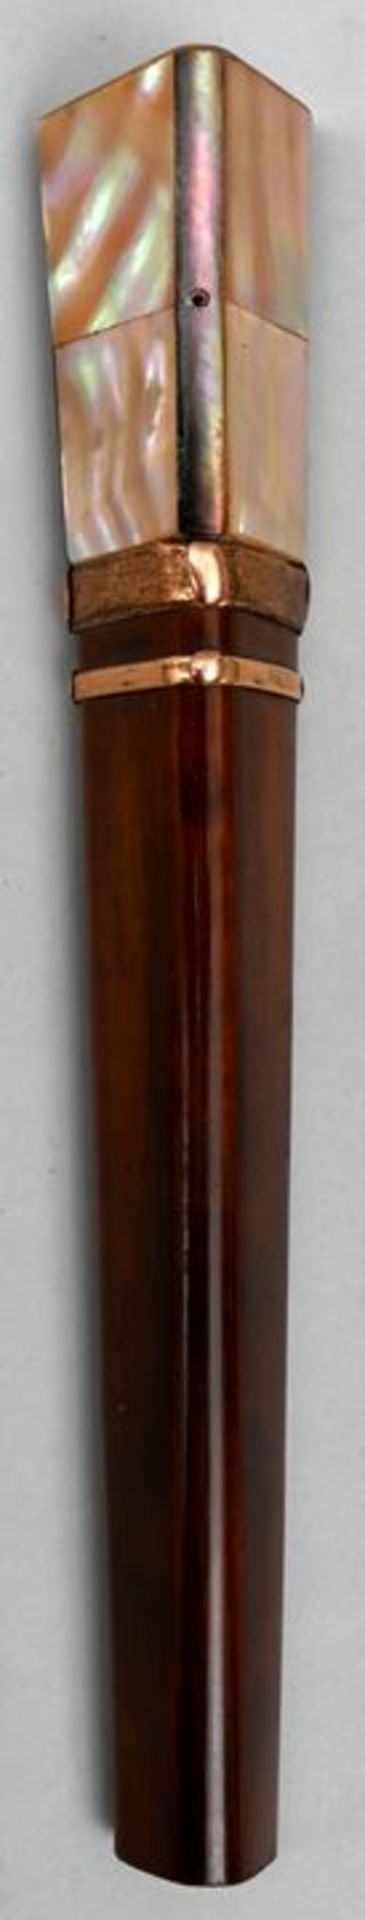 Stockgriff mit PerlmuttbesatzStempel "Double", Holz, Perlmutt, L. 19,5 cm Walking Stick with